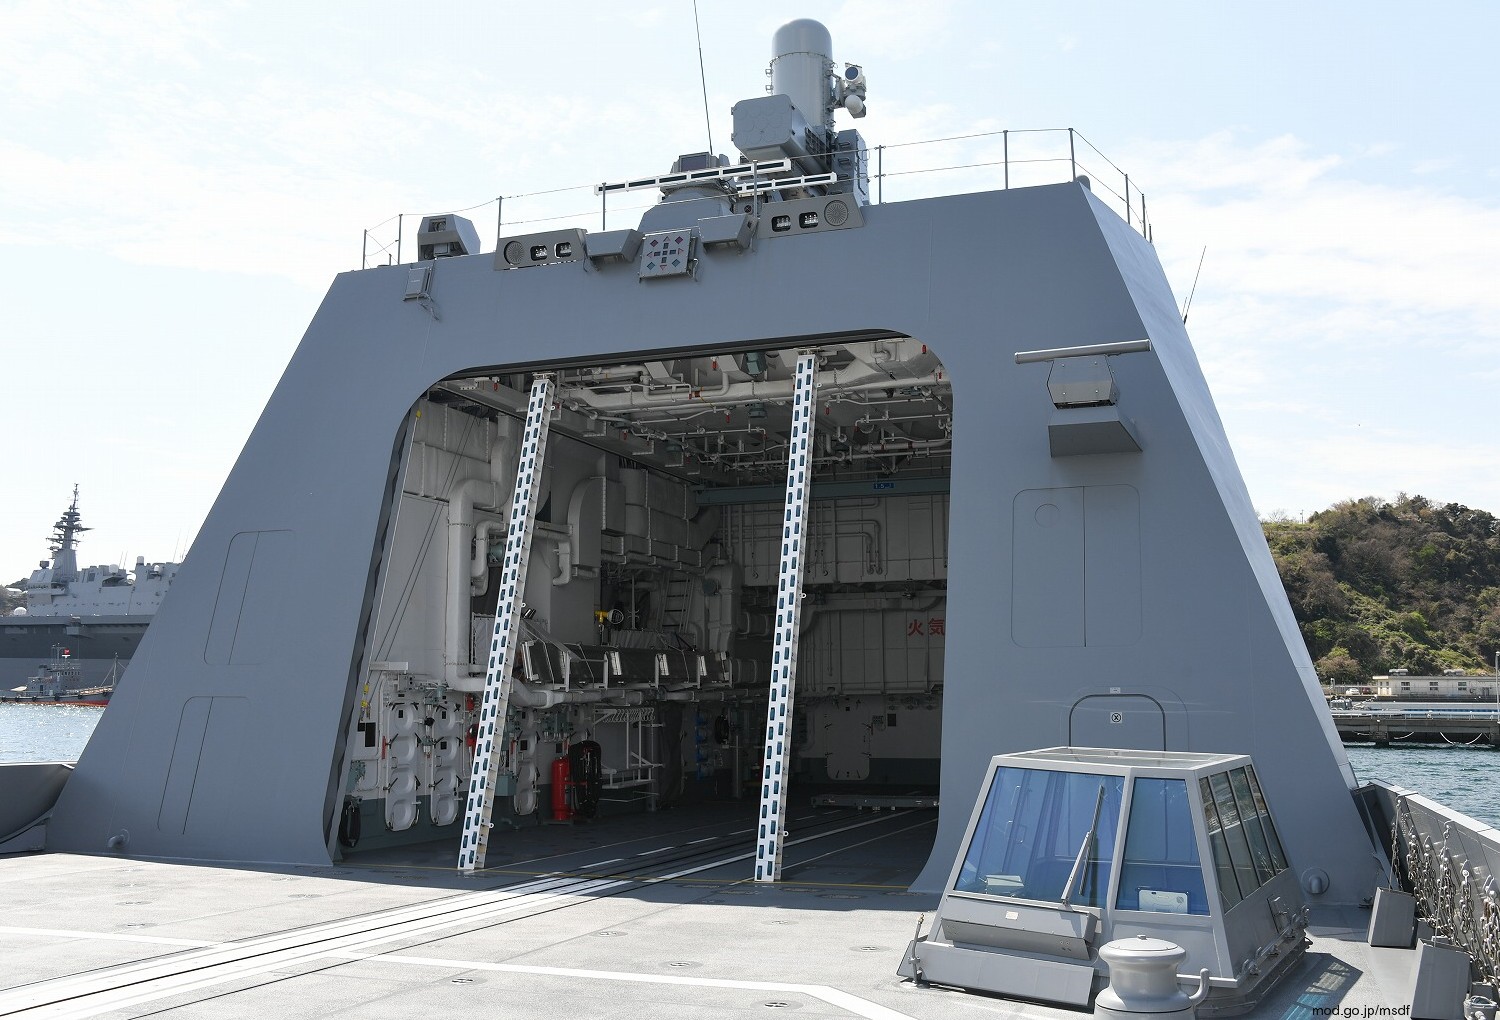 ffm-2 js kumano mogami class frigate multi-mission japan maritime self defense force jmsdf navy 06